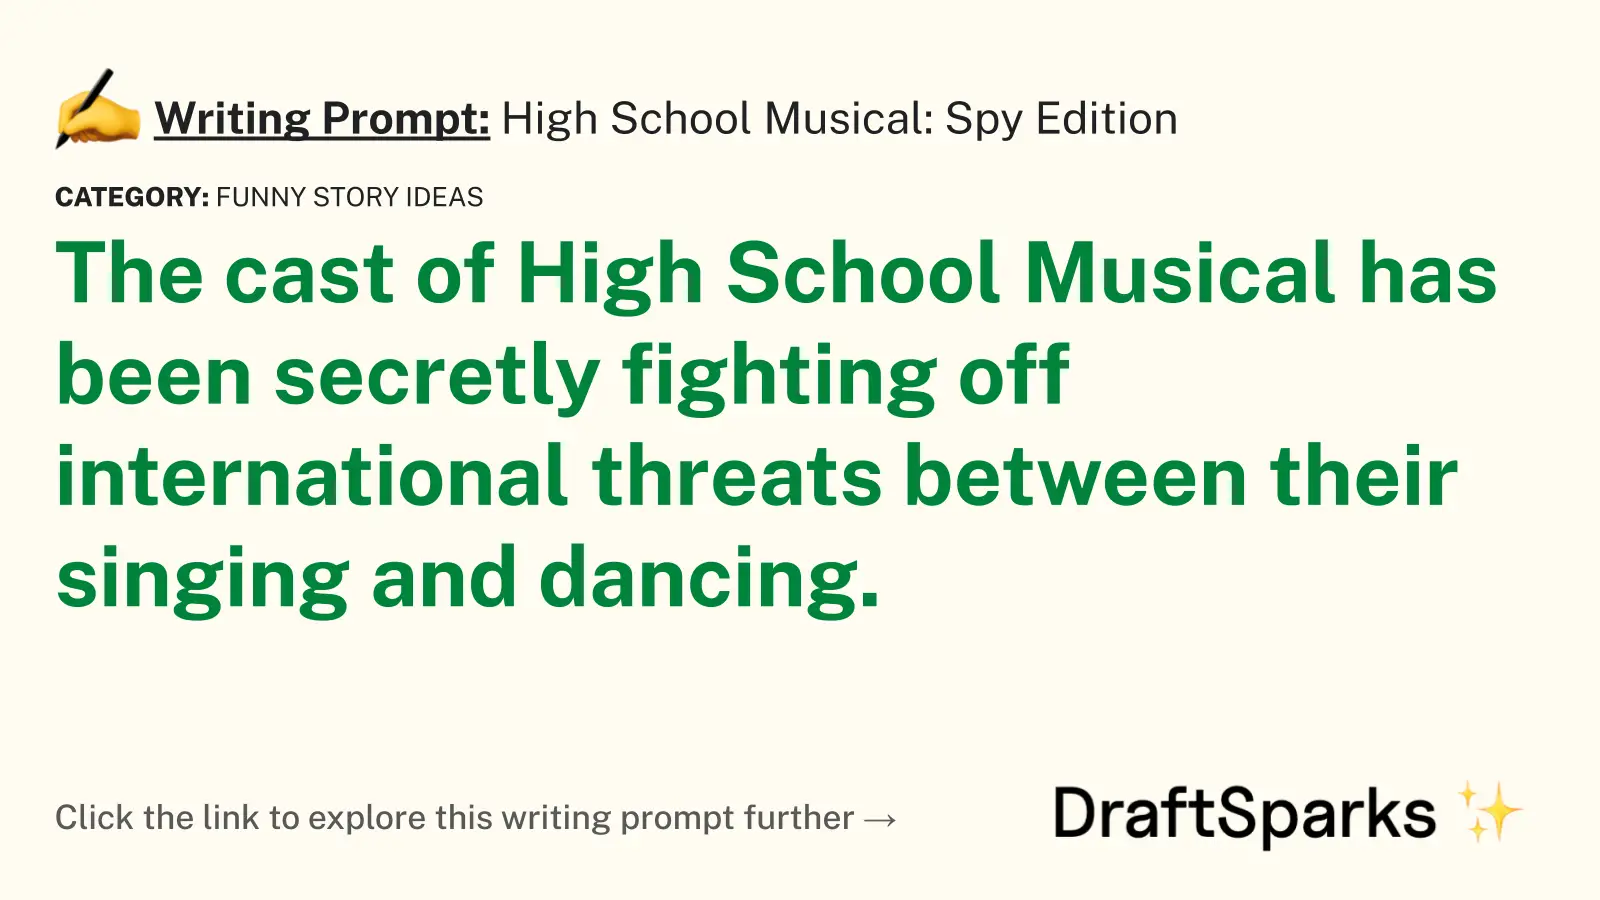 High School Musical: Spy Edition